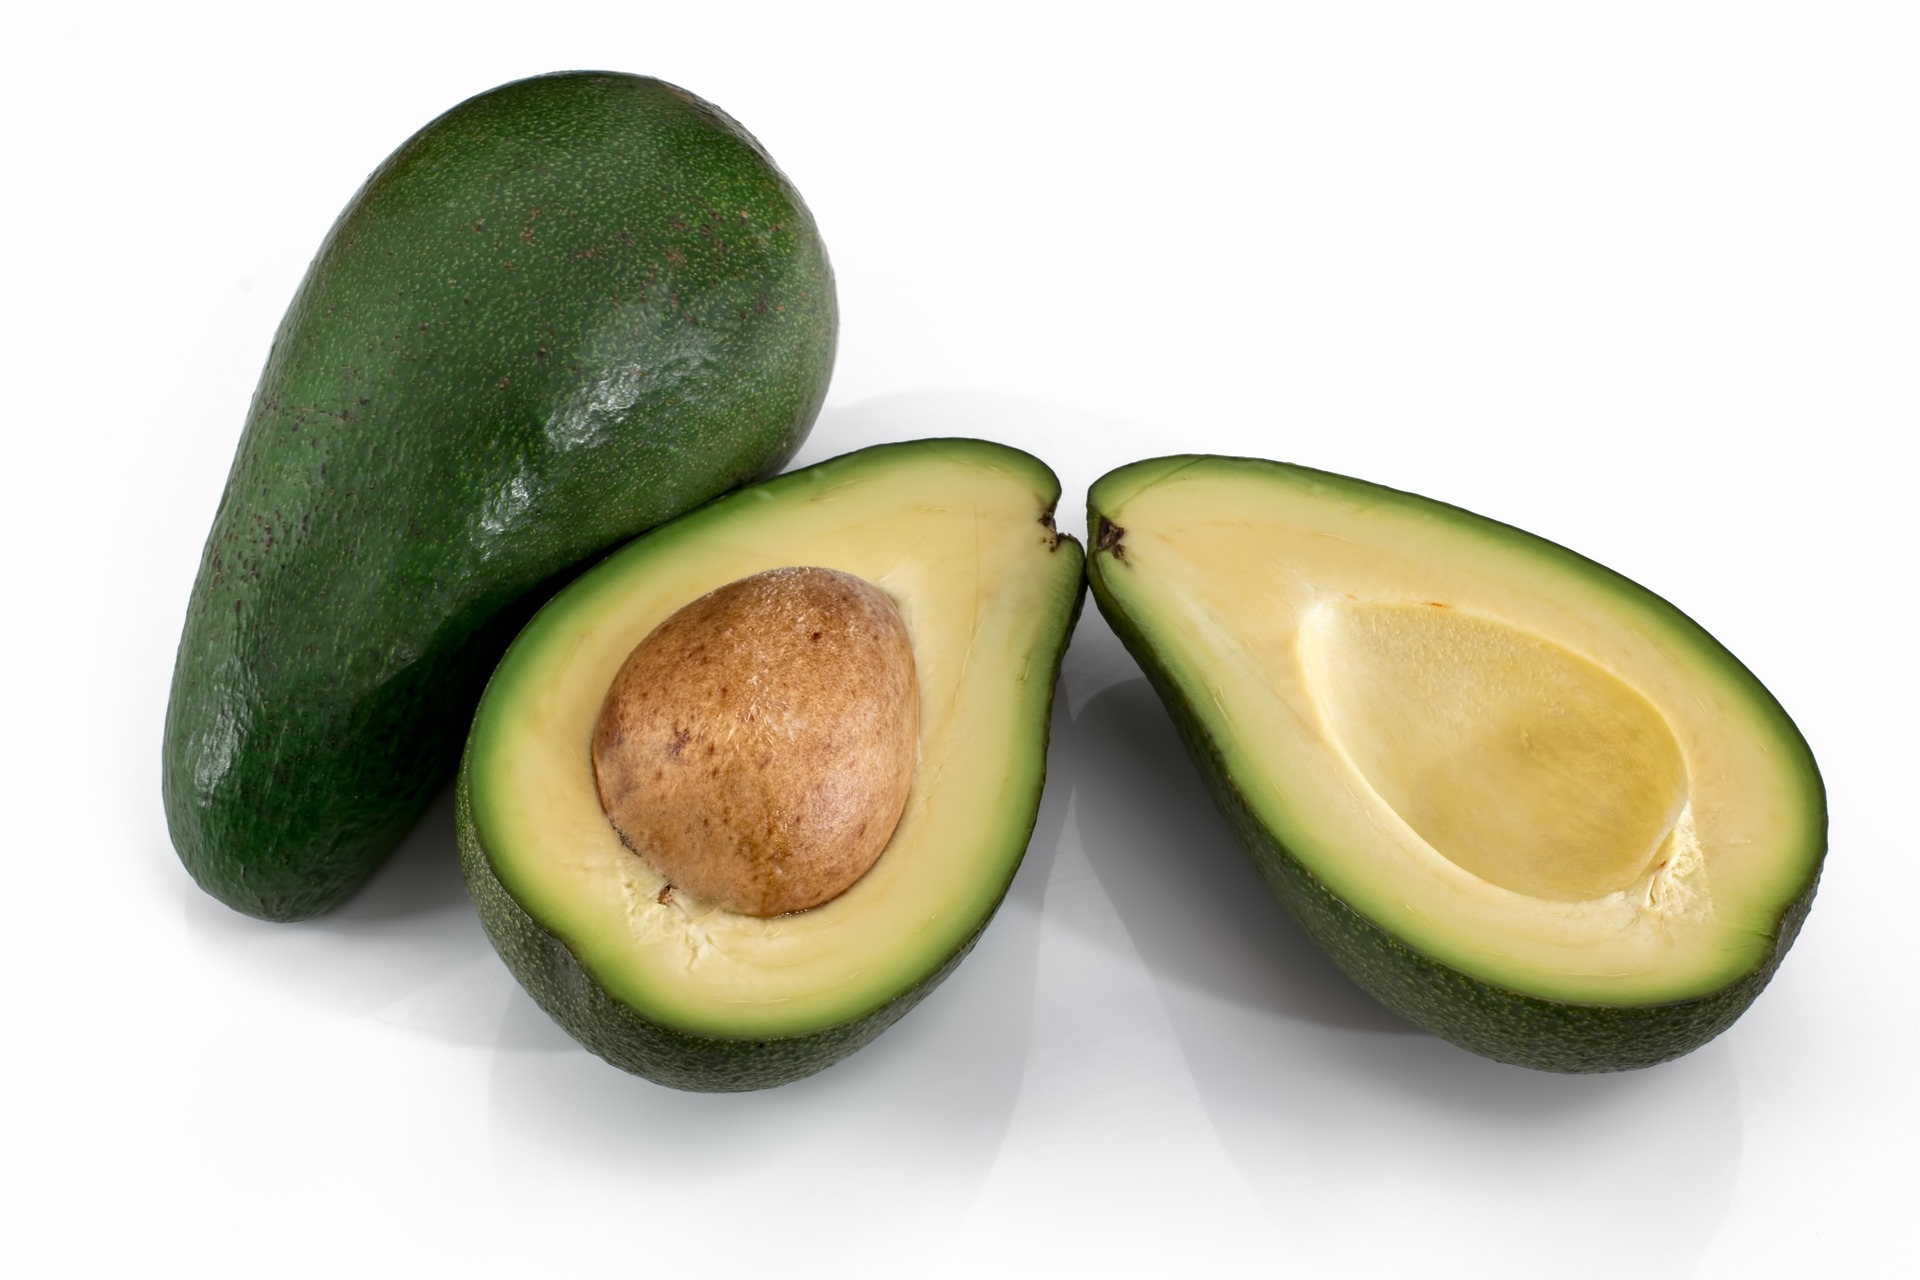 Benefits of avocados